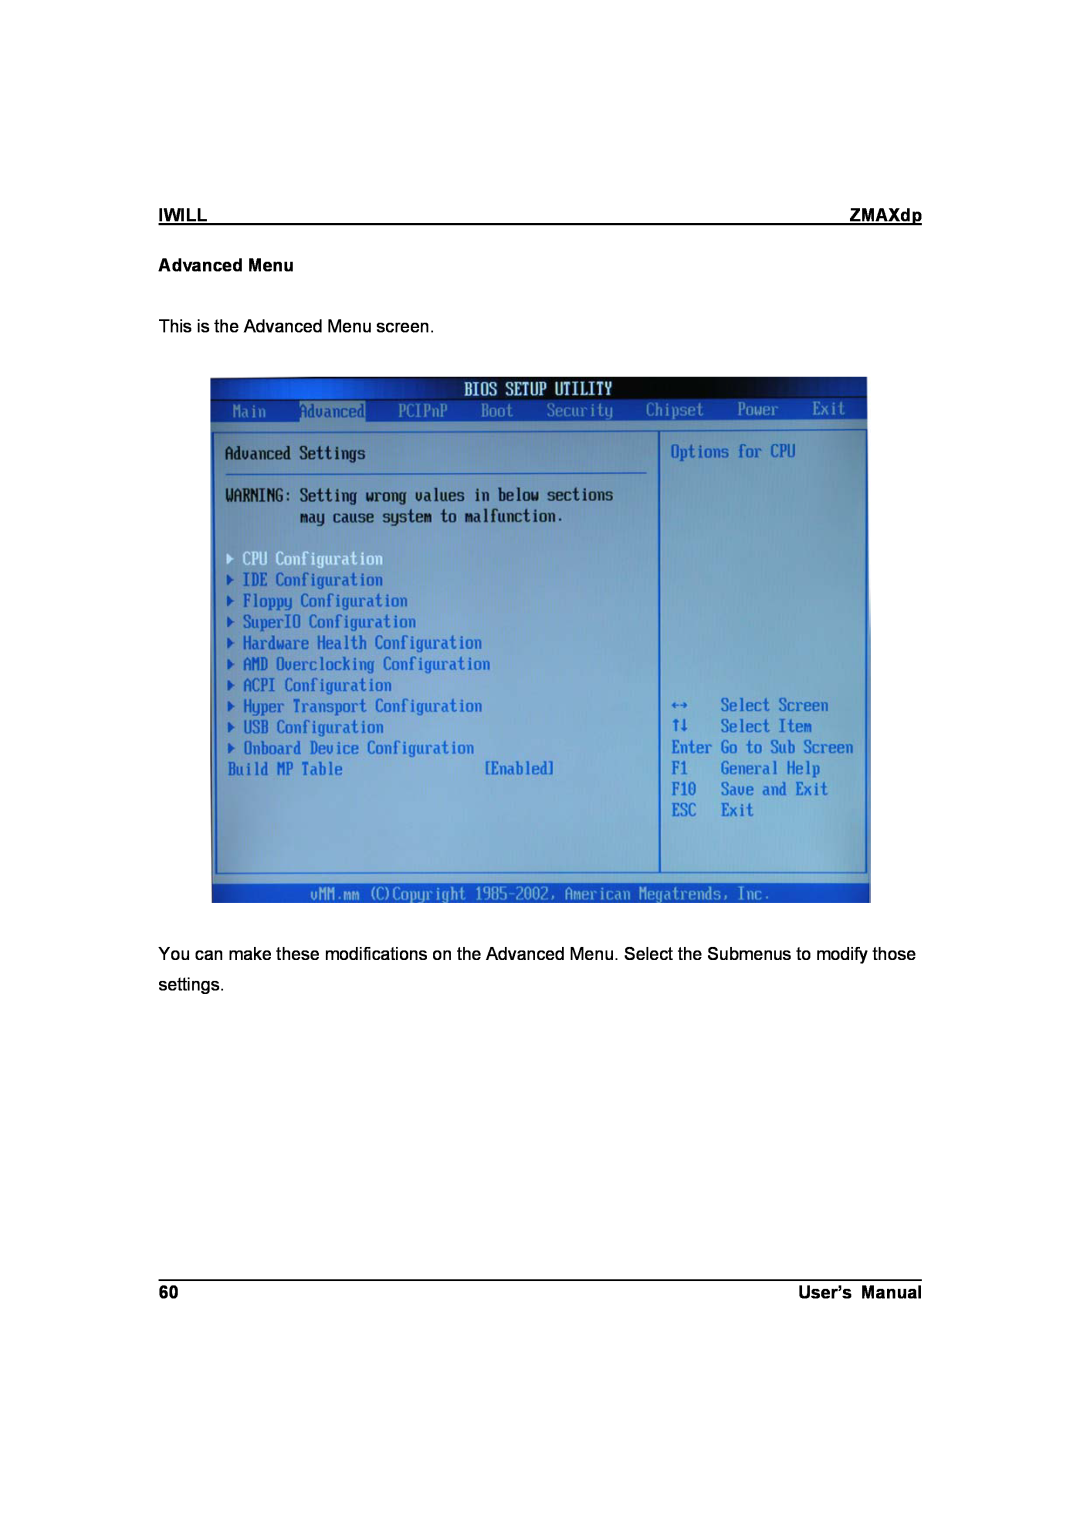 IBM ZMAXdp user manual Iwill, This is the Advanced Menu screen, User’s Manual 